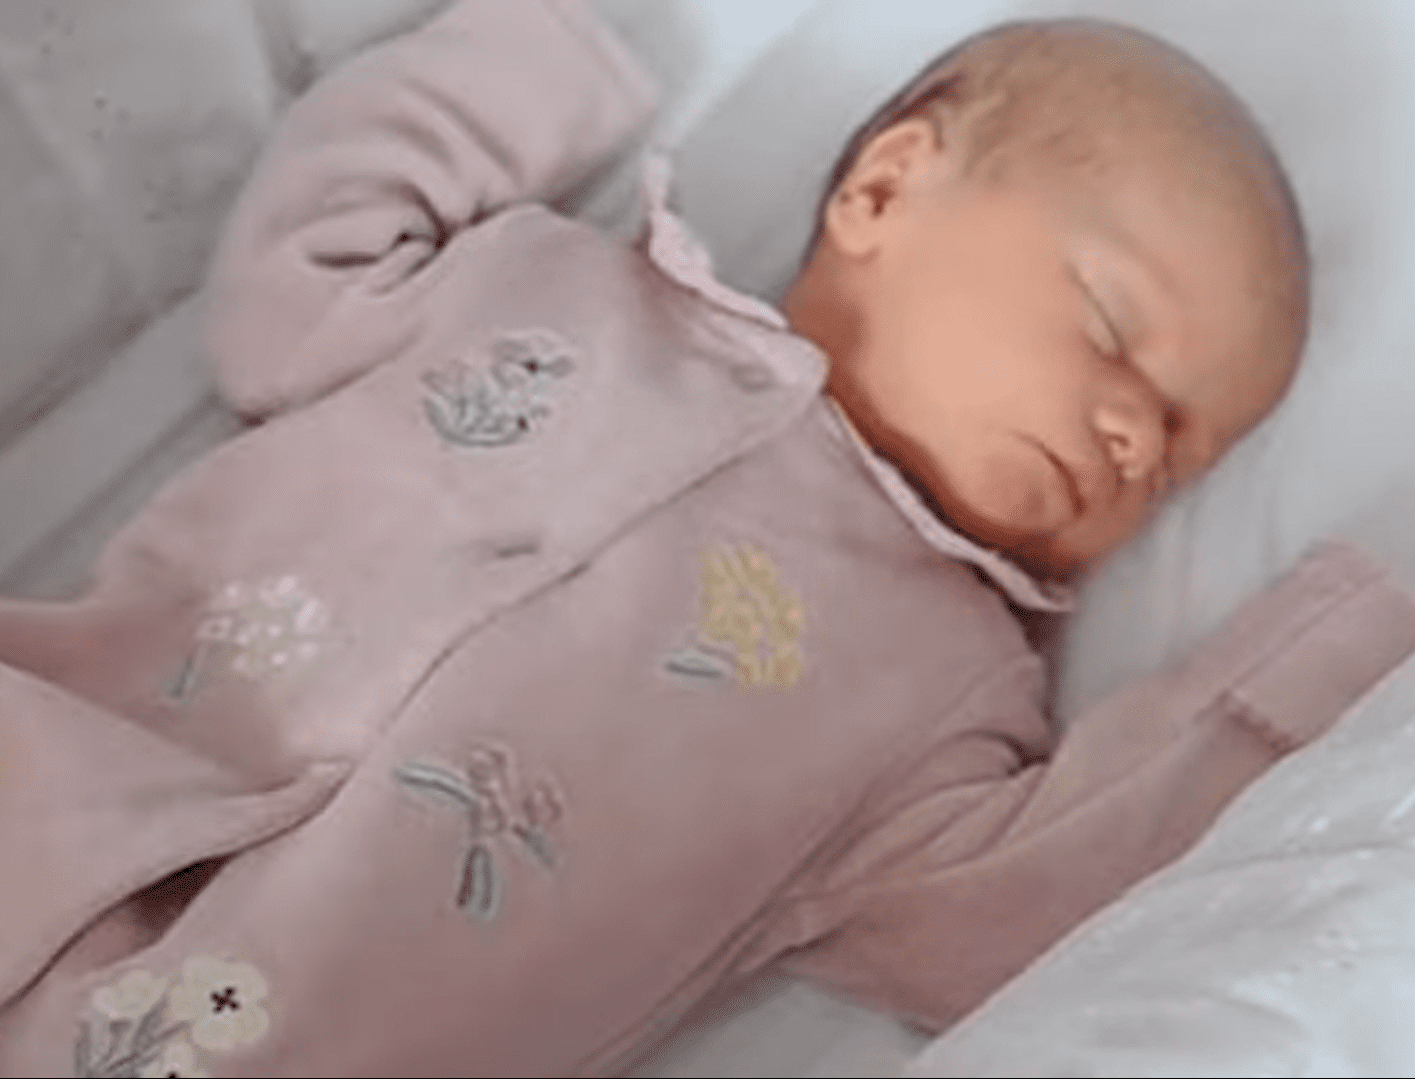 Bebé Baylee-Rae durmiendo. | Foto: Youtube.com/Wales Online